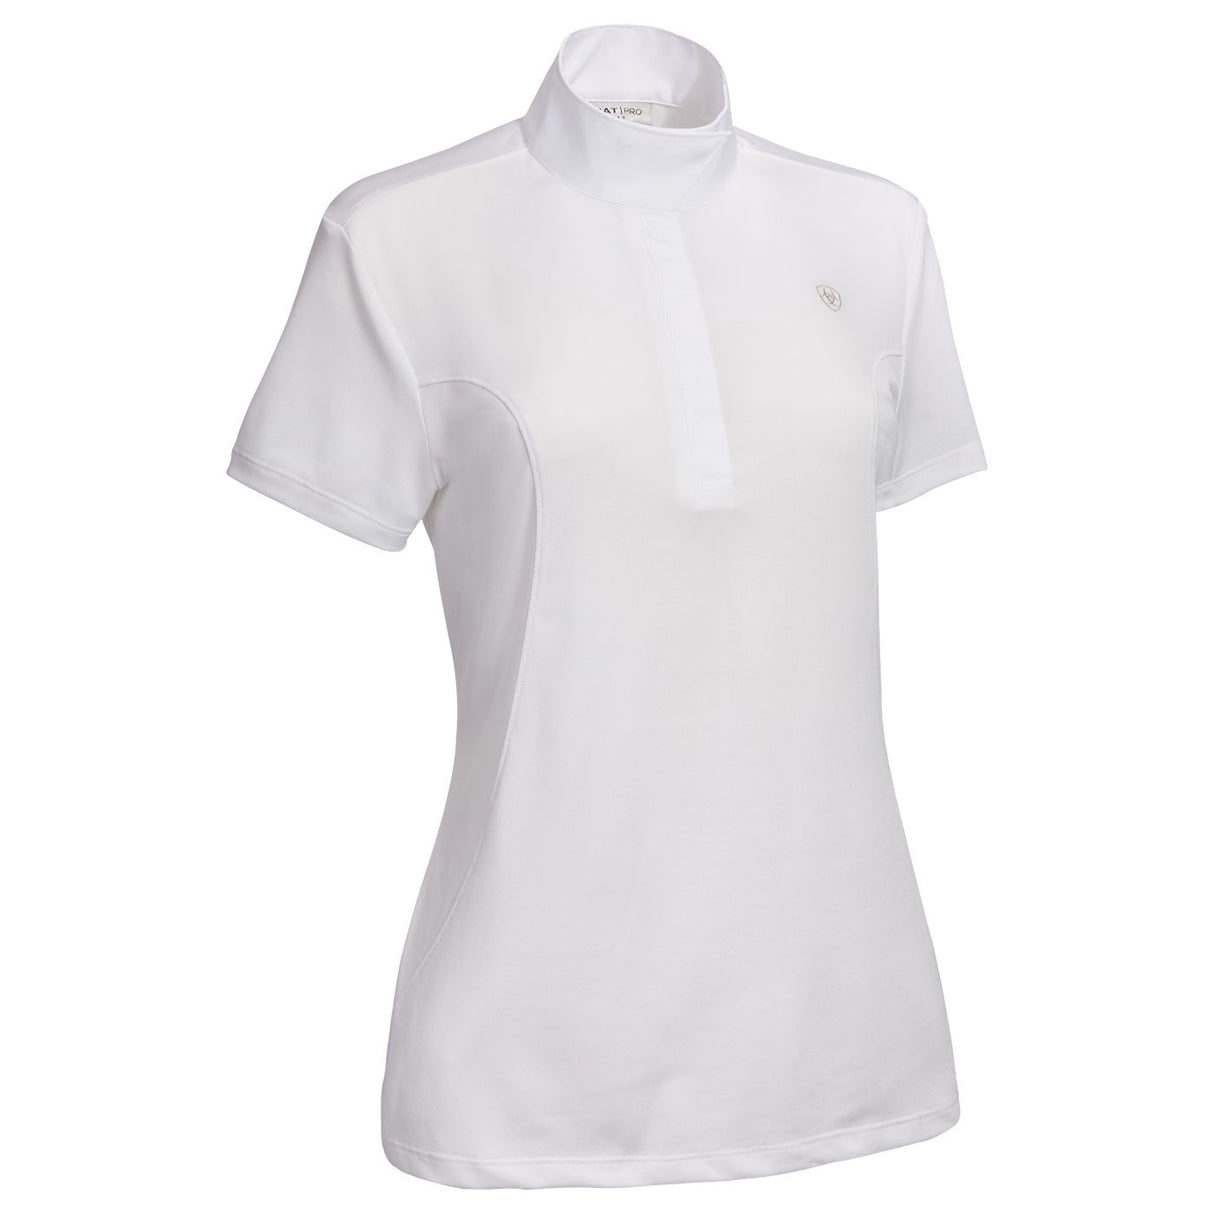 Ariat Aptos Short Sleeve Show Shirt